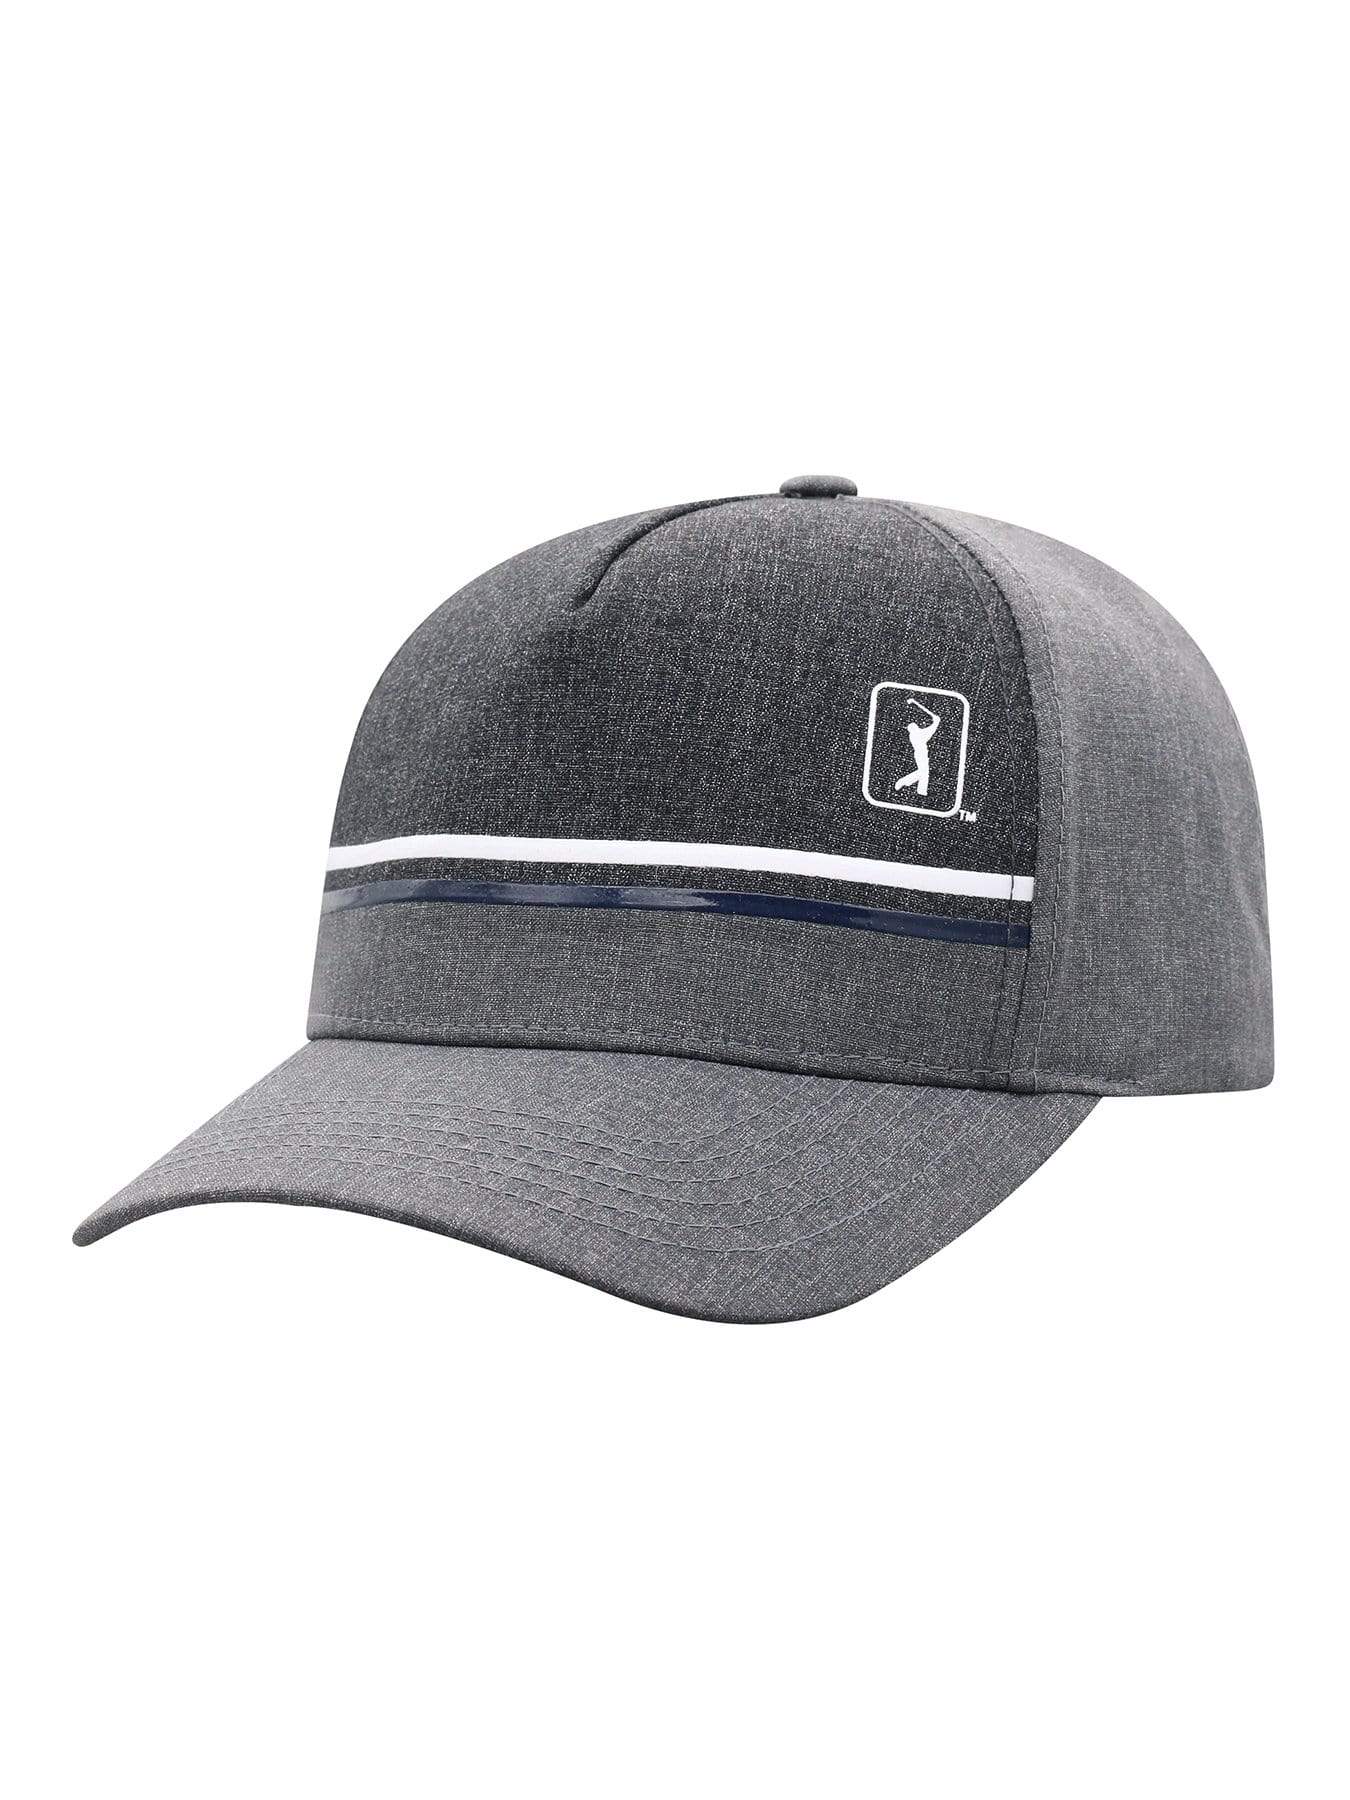 PGA TOUR Apparel Striped Snapback Adjustable Hat, Grey Heather Gray | Golf Apparel Shop